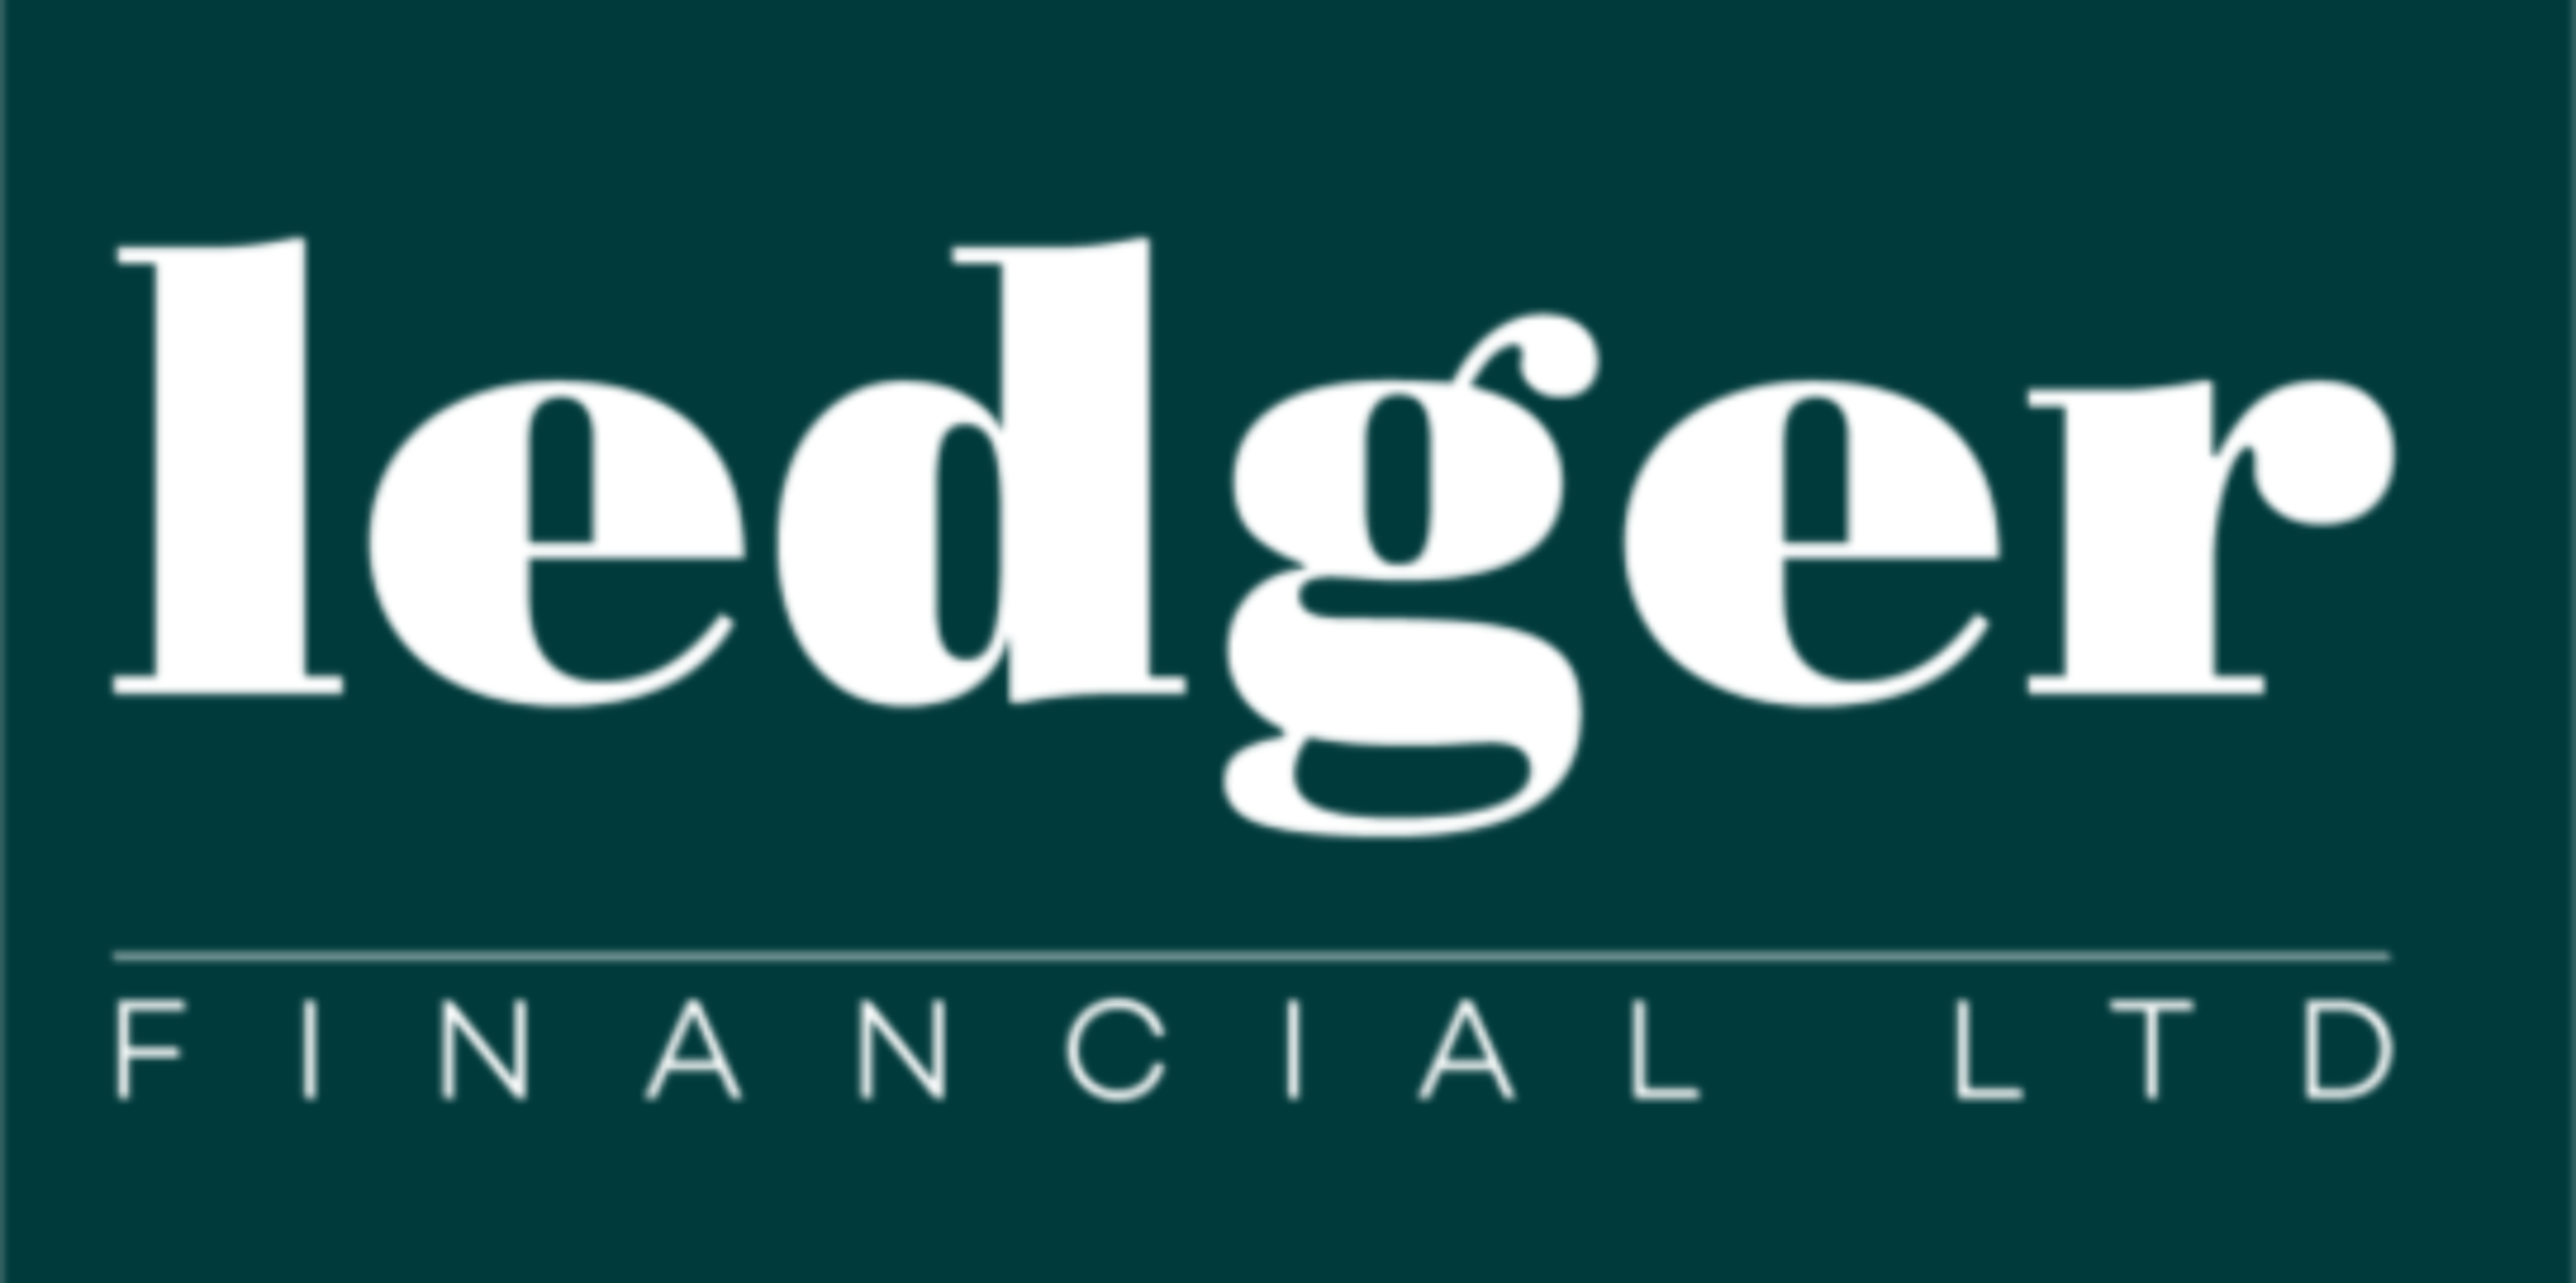 Ledger Financial Limited